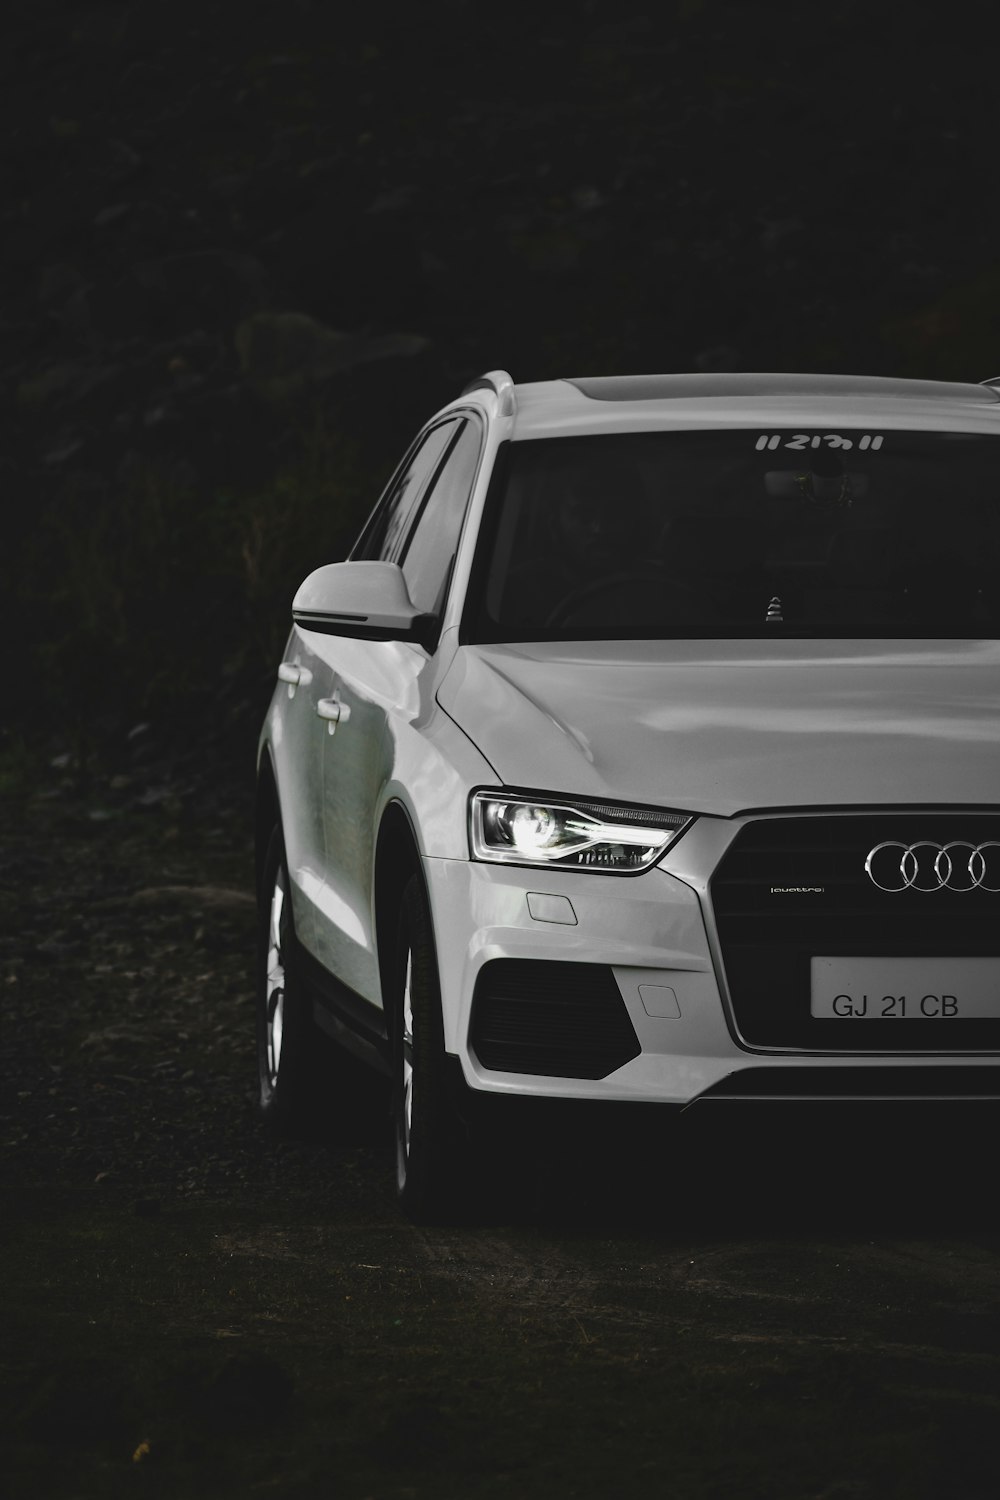 Audi Q3 Pictures | Download Free Images on Unsplash